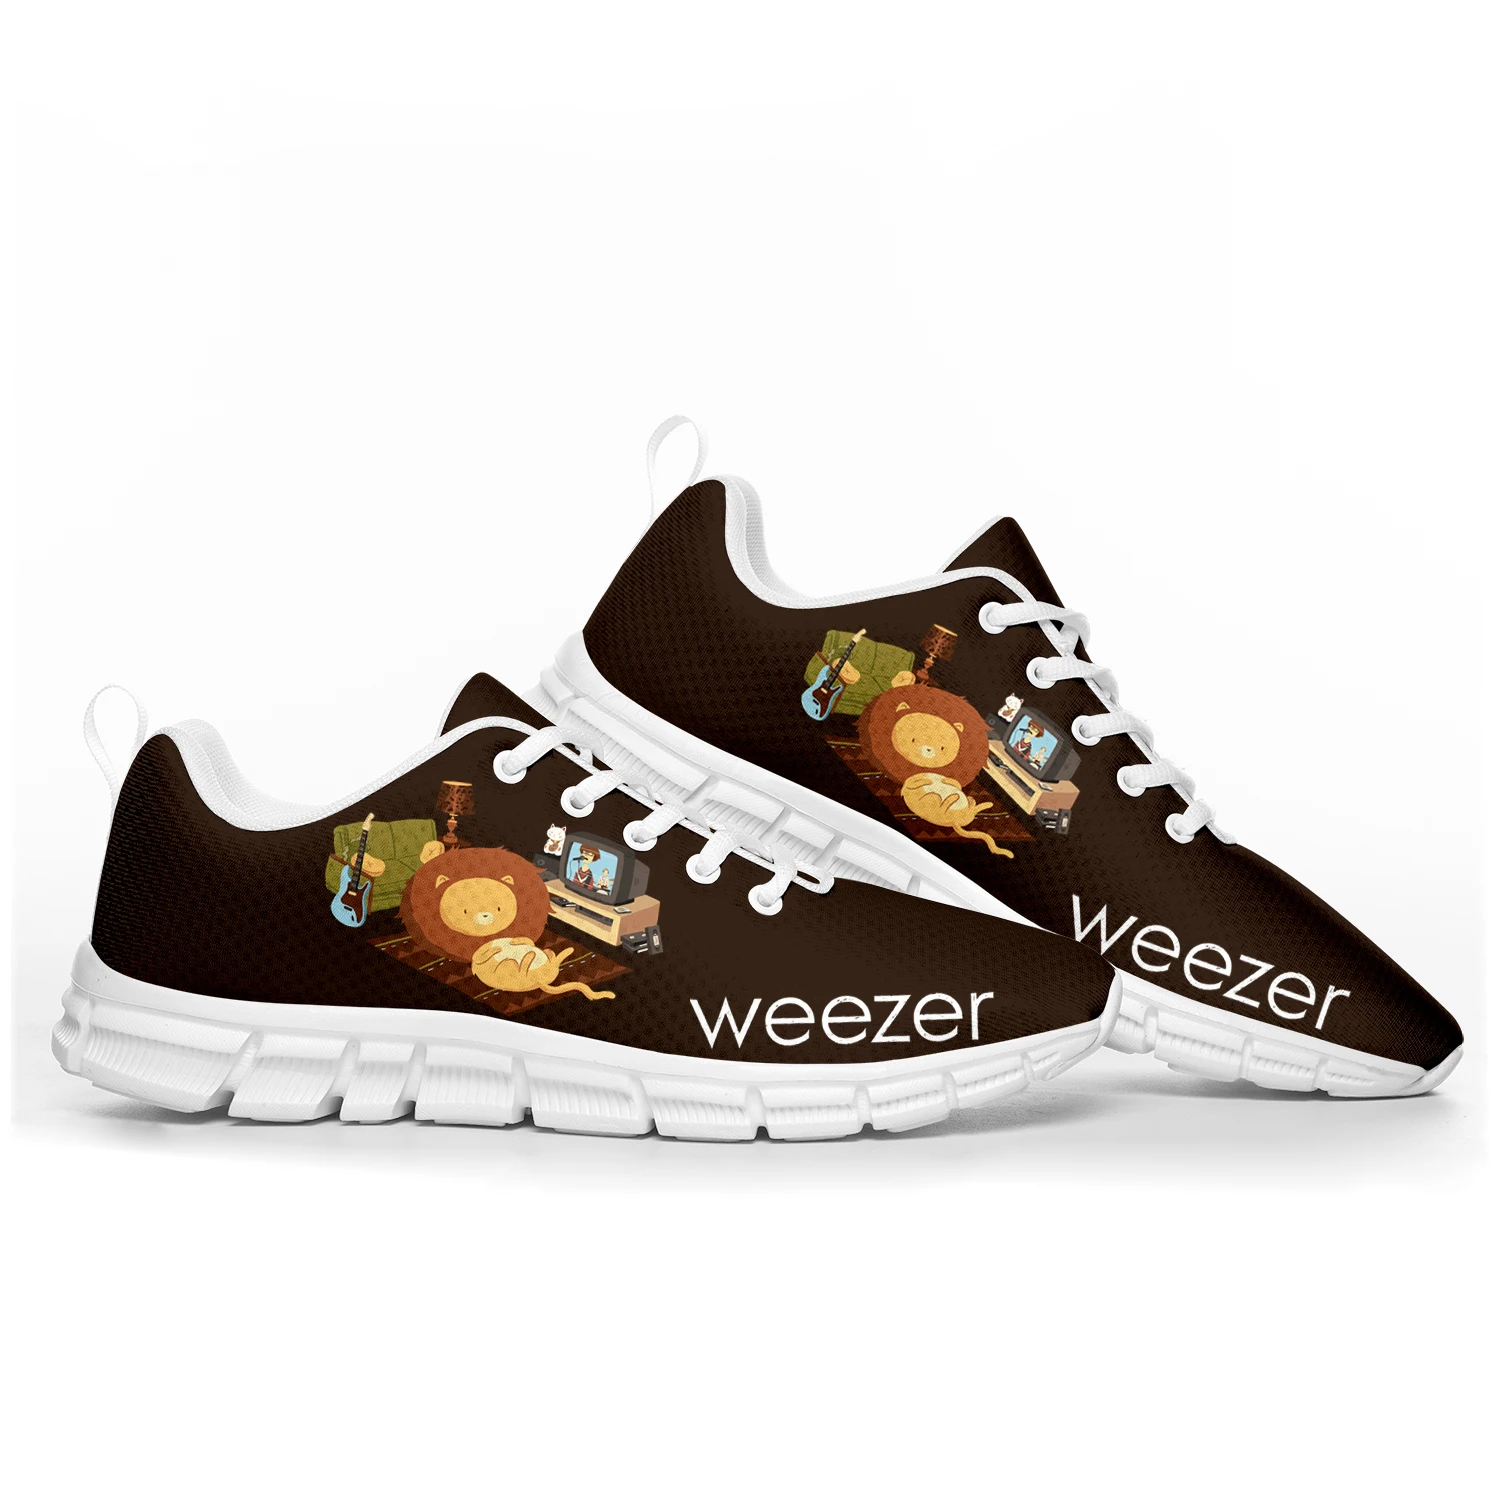 Weezer, Спортни Обувки В стил Поп-рок-група, Мъжки Дамски Обувки За Юноши, Детски Обувки, Ежедневни Висококачествени Обувки За Двойки, Бяла